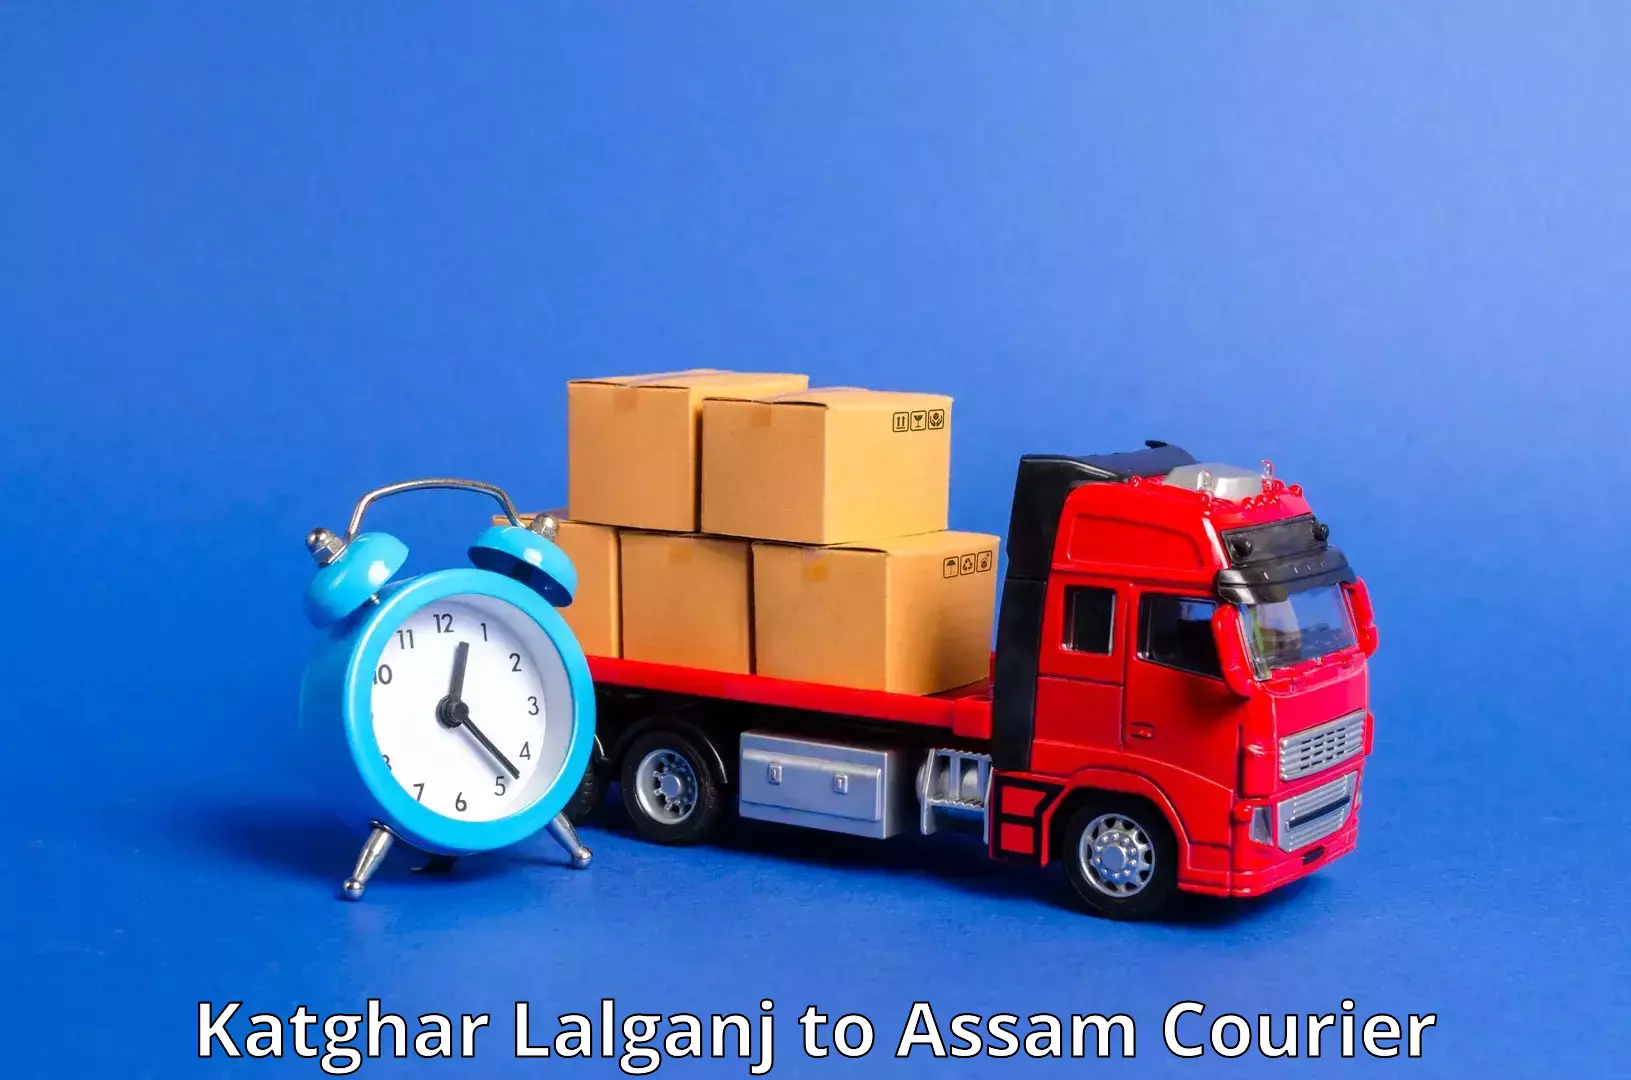 Global shipping networks Katghar Lalganj to Dibrugarh